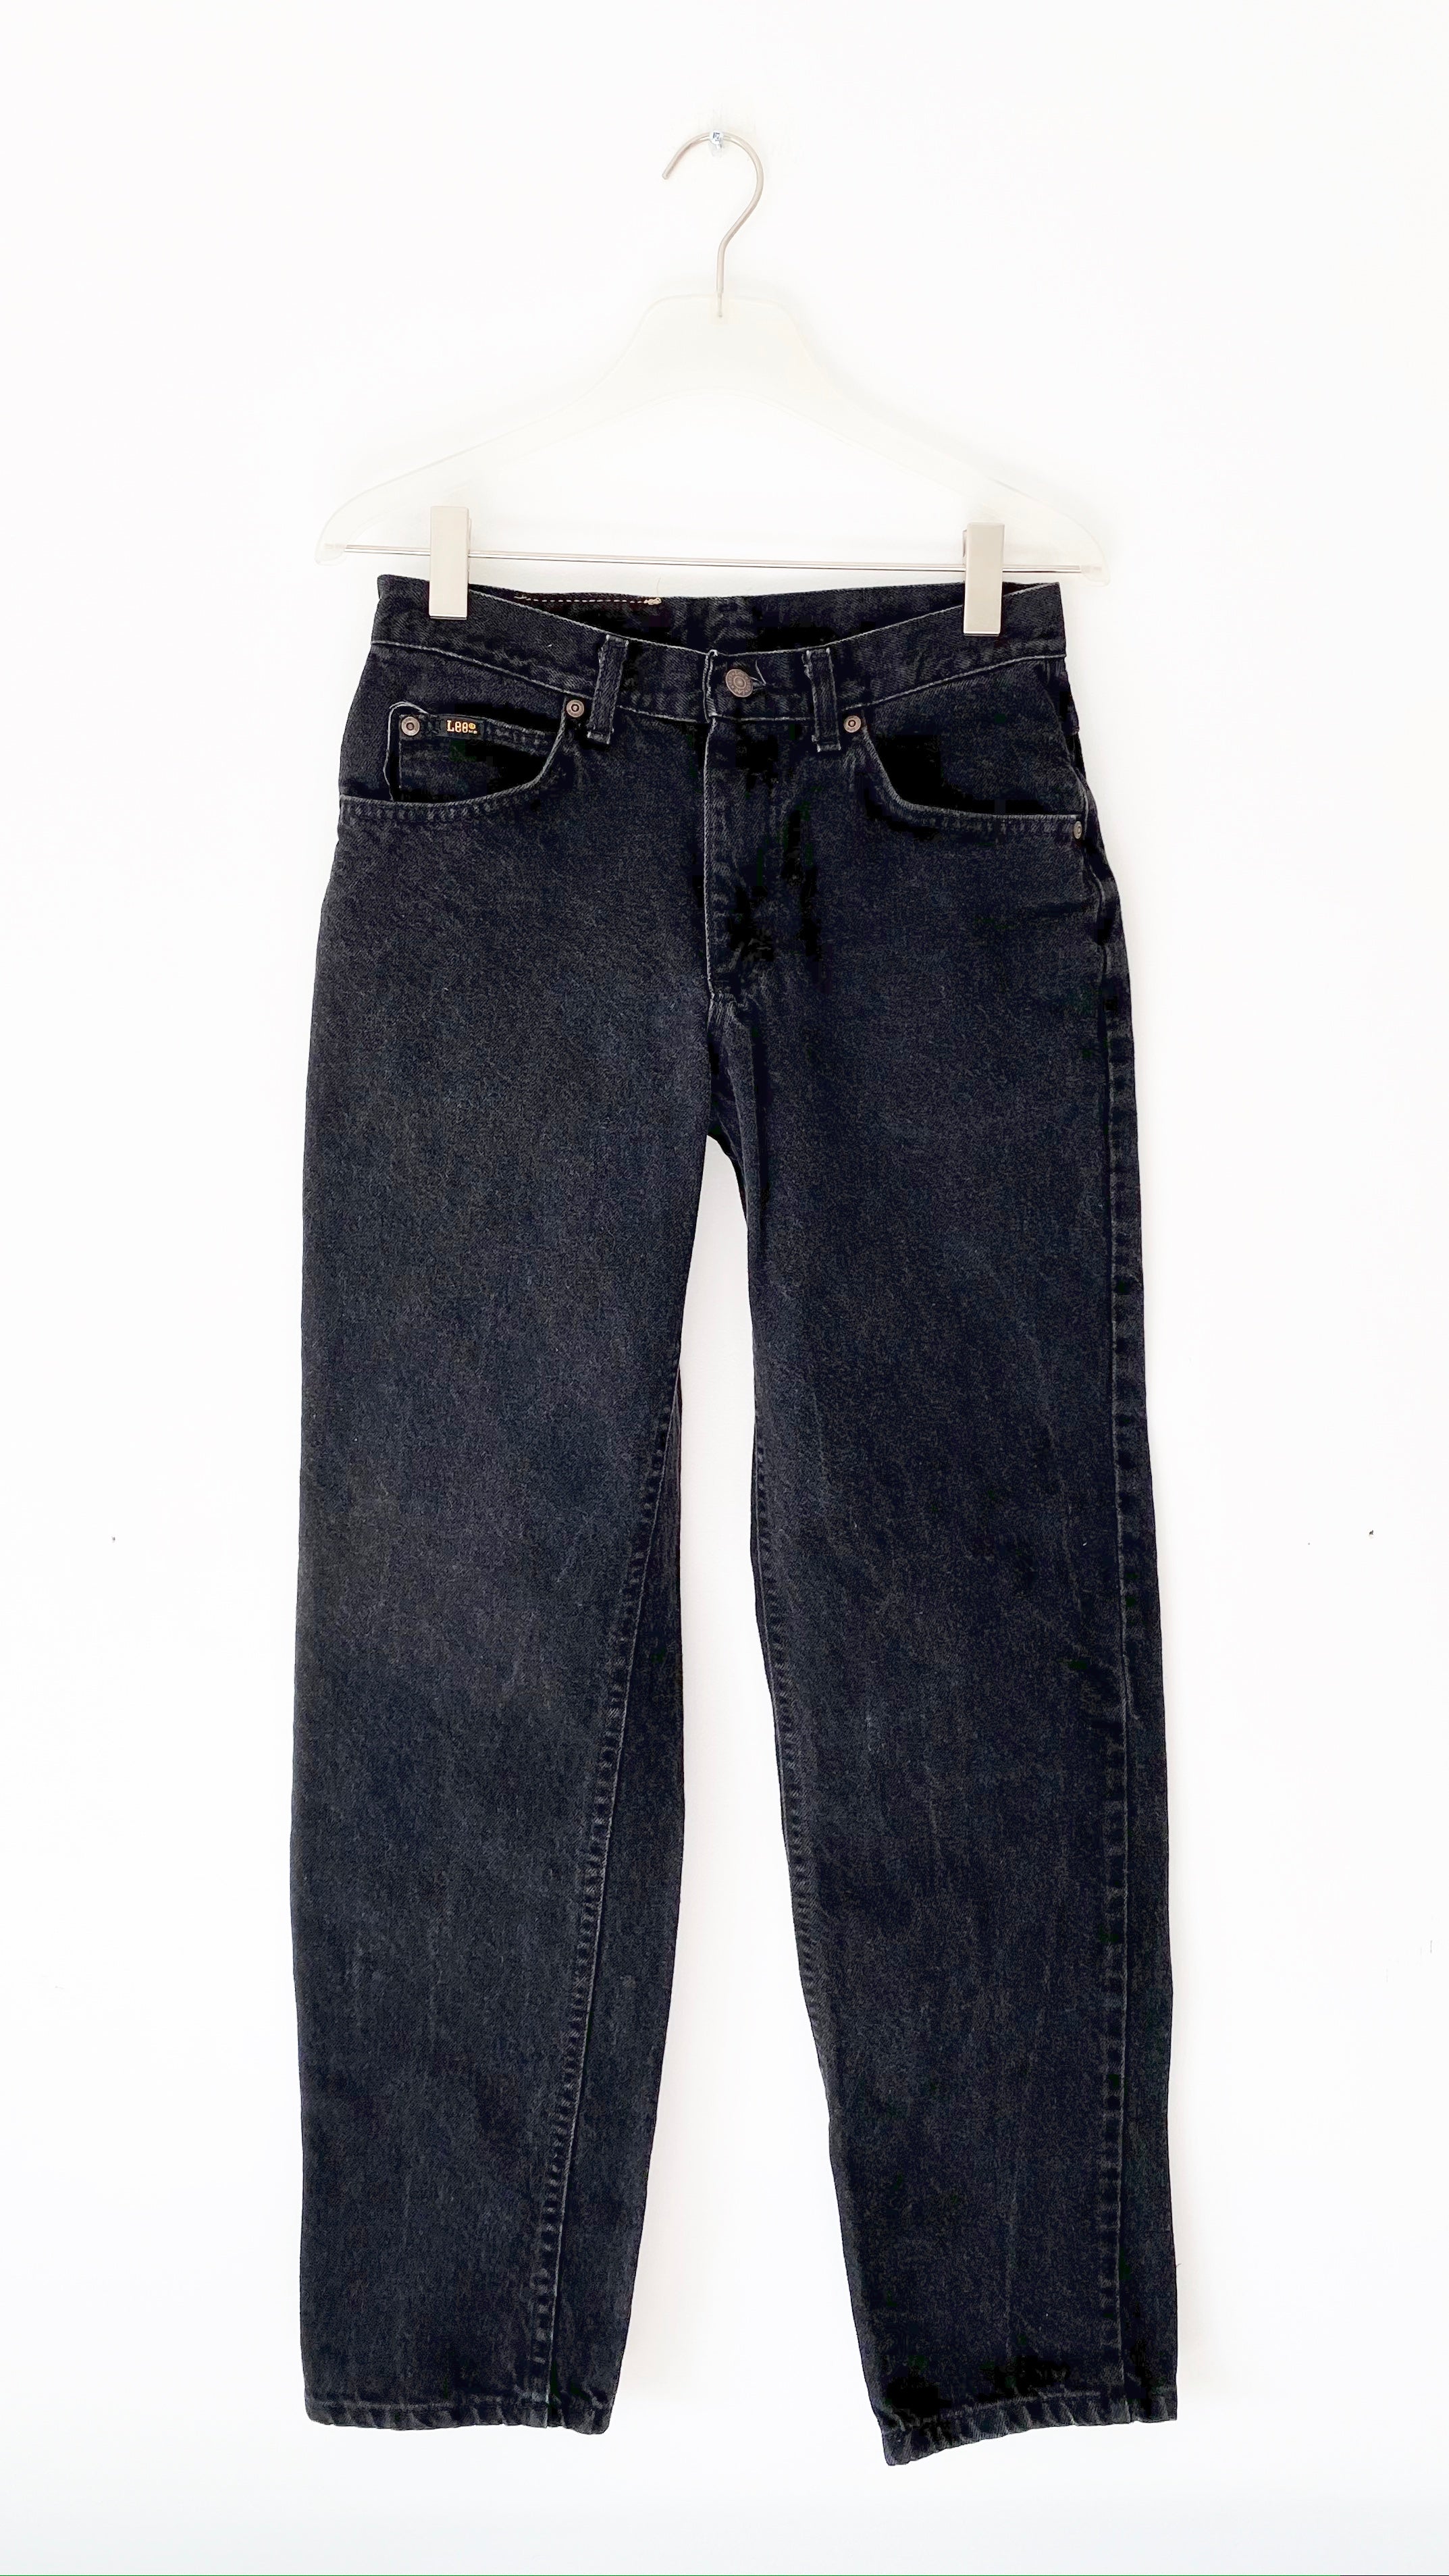 Vintage LEEs Made in USA Black Wash Jeans size 28